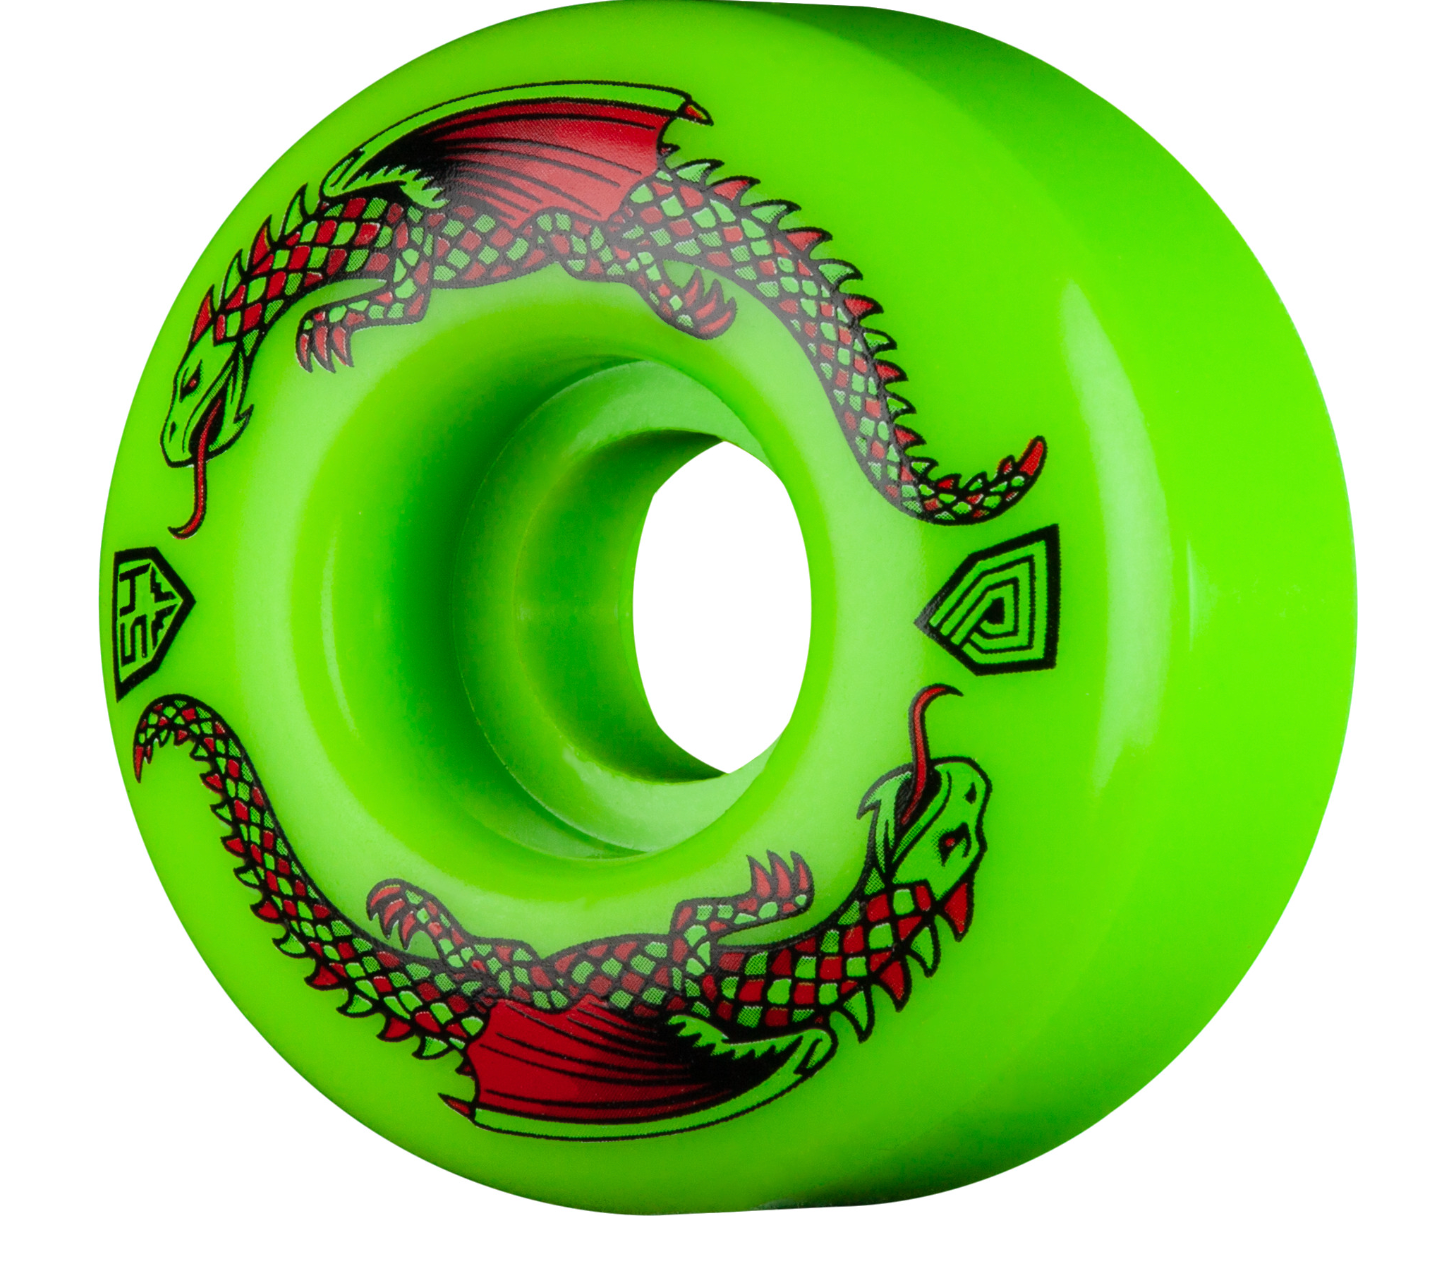 Powell Peralta Dragon Formula Green Skateboard Wheels 54mm x 32mm 93A